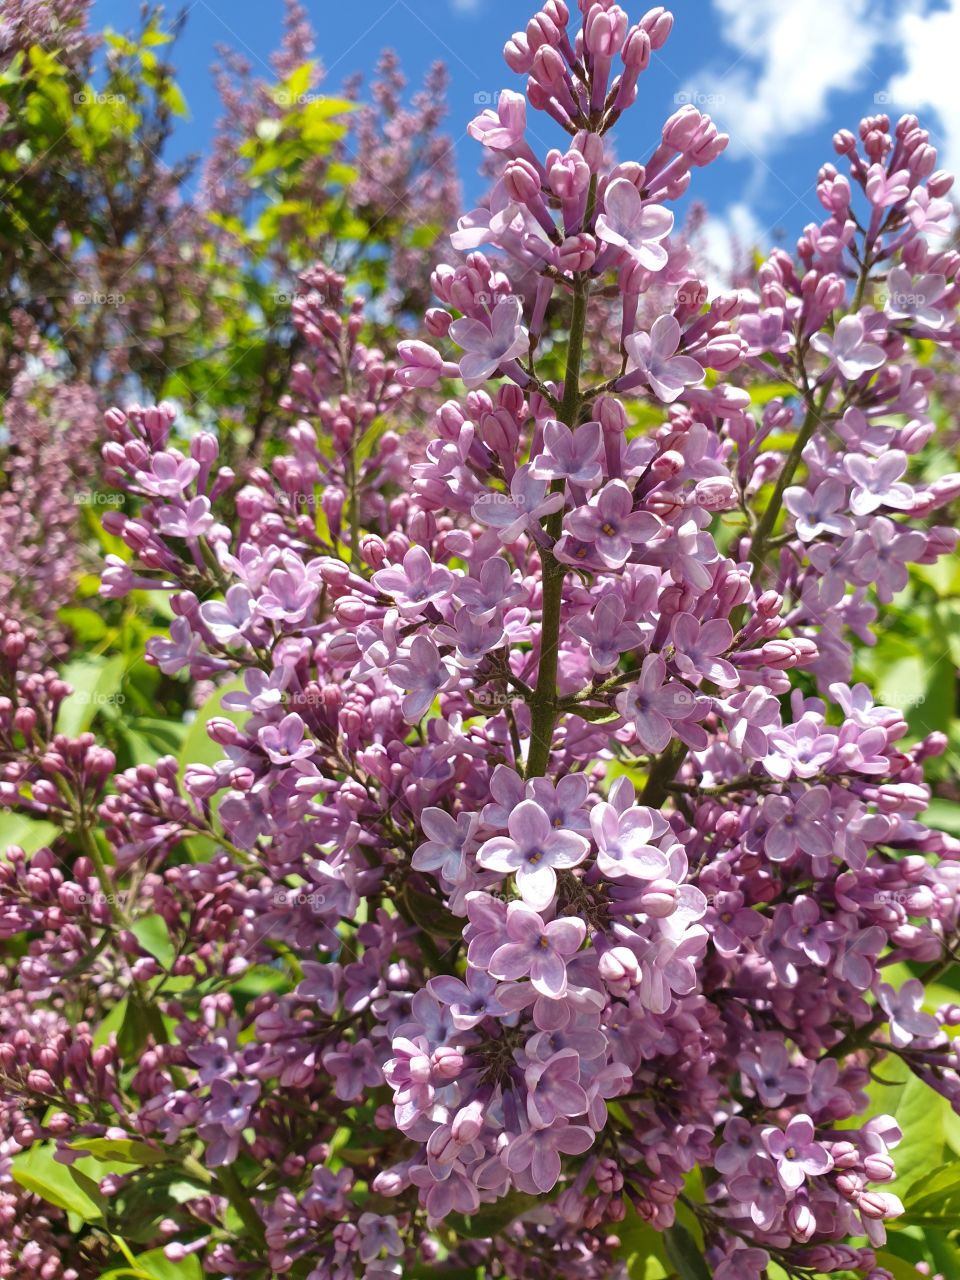 Purple flowers in may.